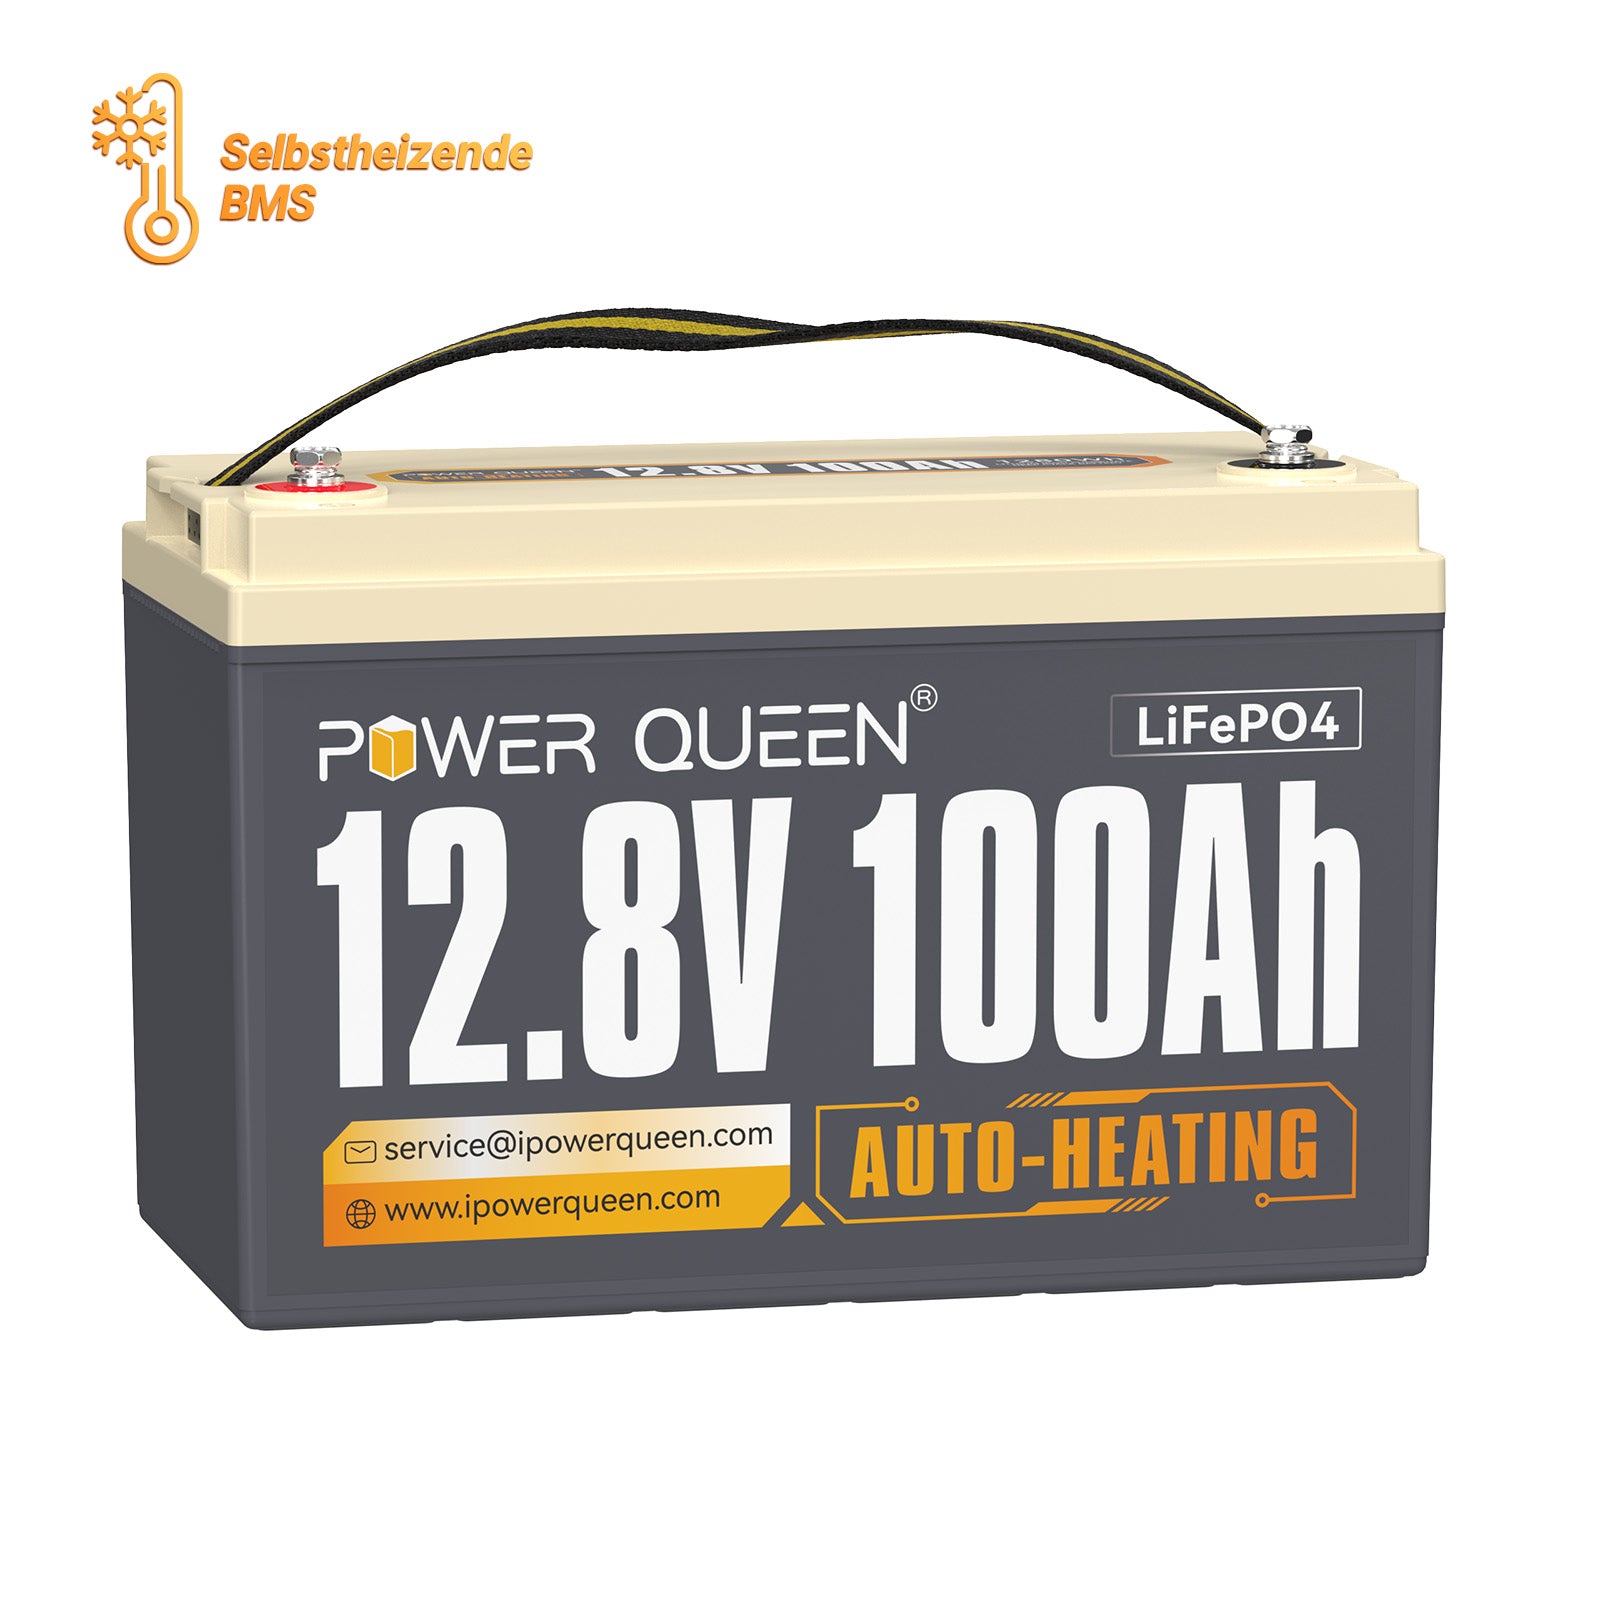 【0% IVA】Batteria LiFePO4 autoriscaldante Power Queen 12V 100Ah, BMS 100A integrato